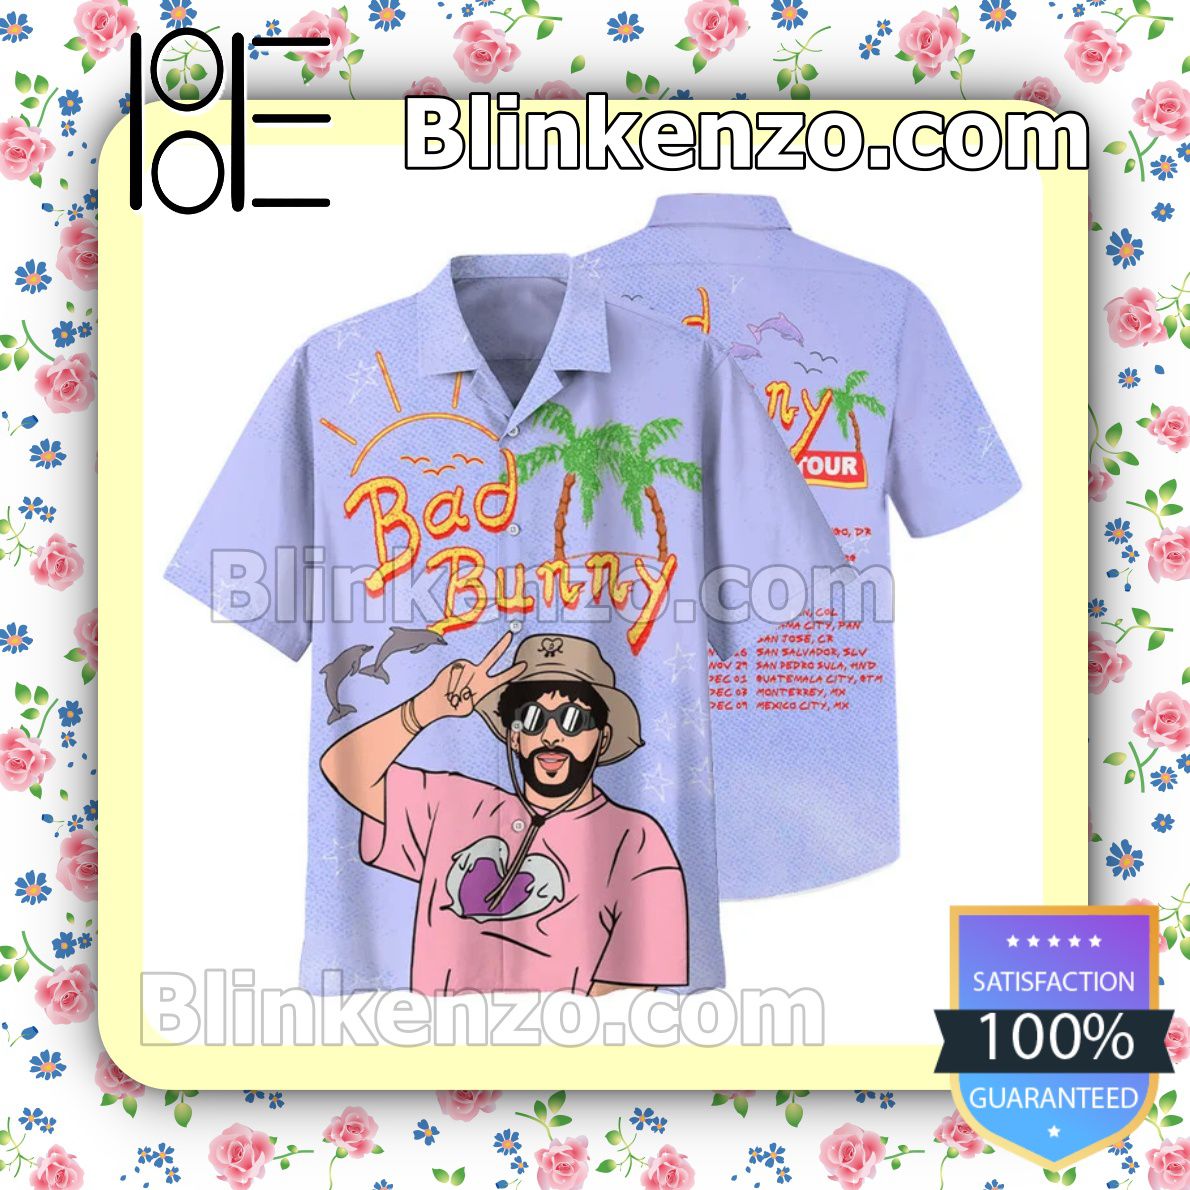 Bad Bunny Bleached 2022 Tour Beach Summer Shirt